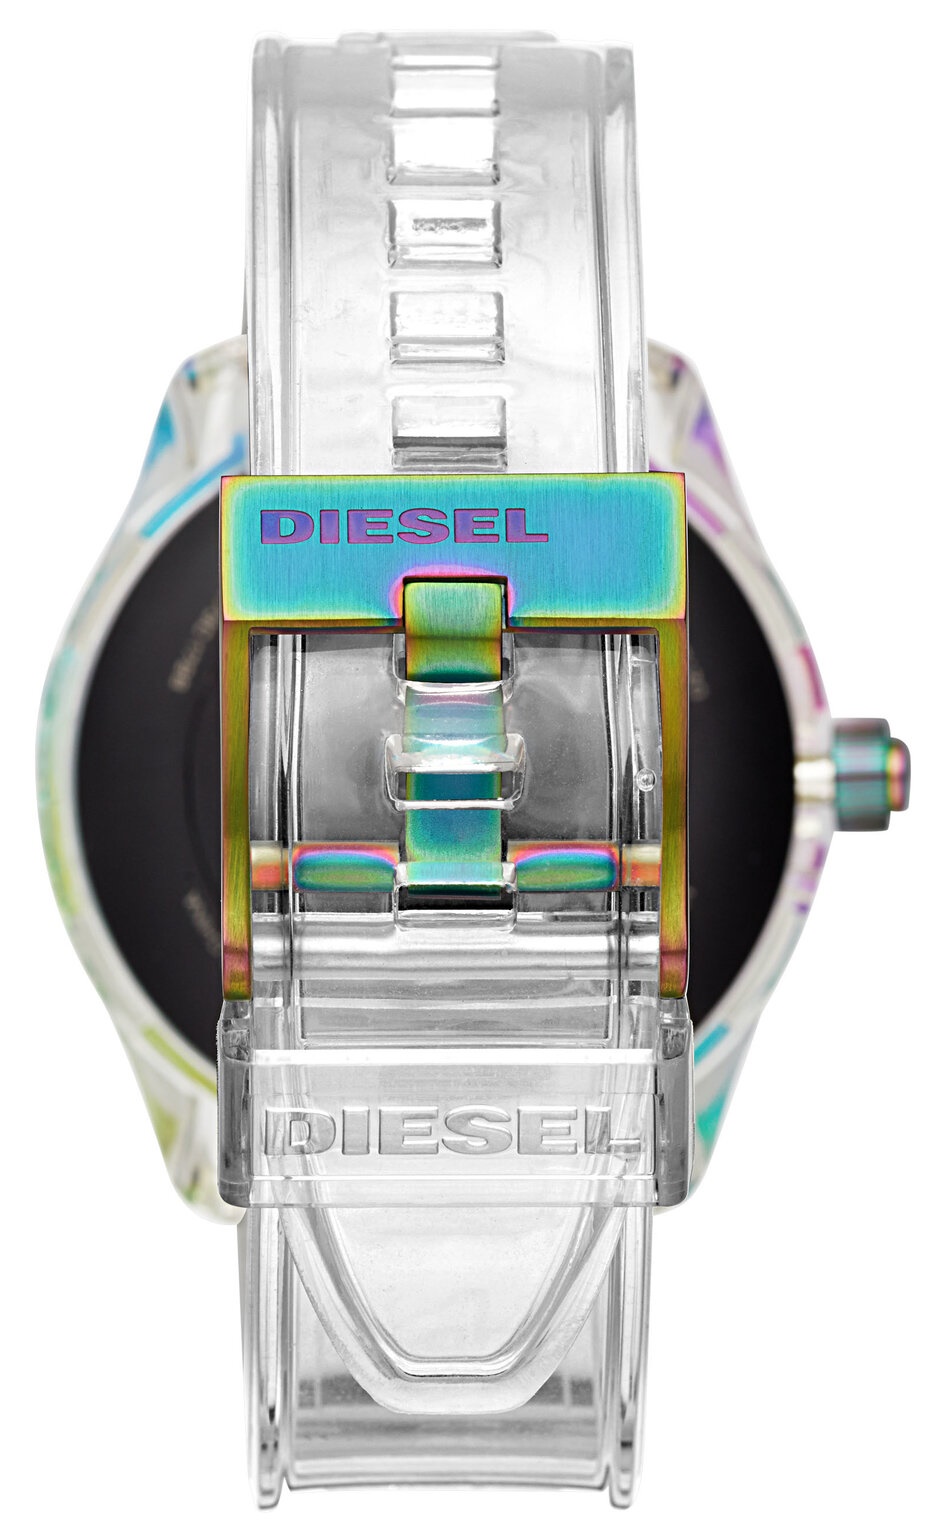 Fossil Diesel MDJ Fadelite, đồng hồ thông minh